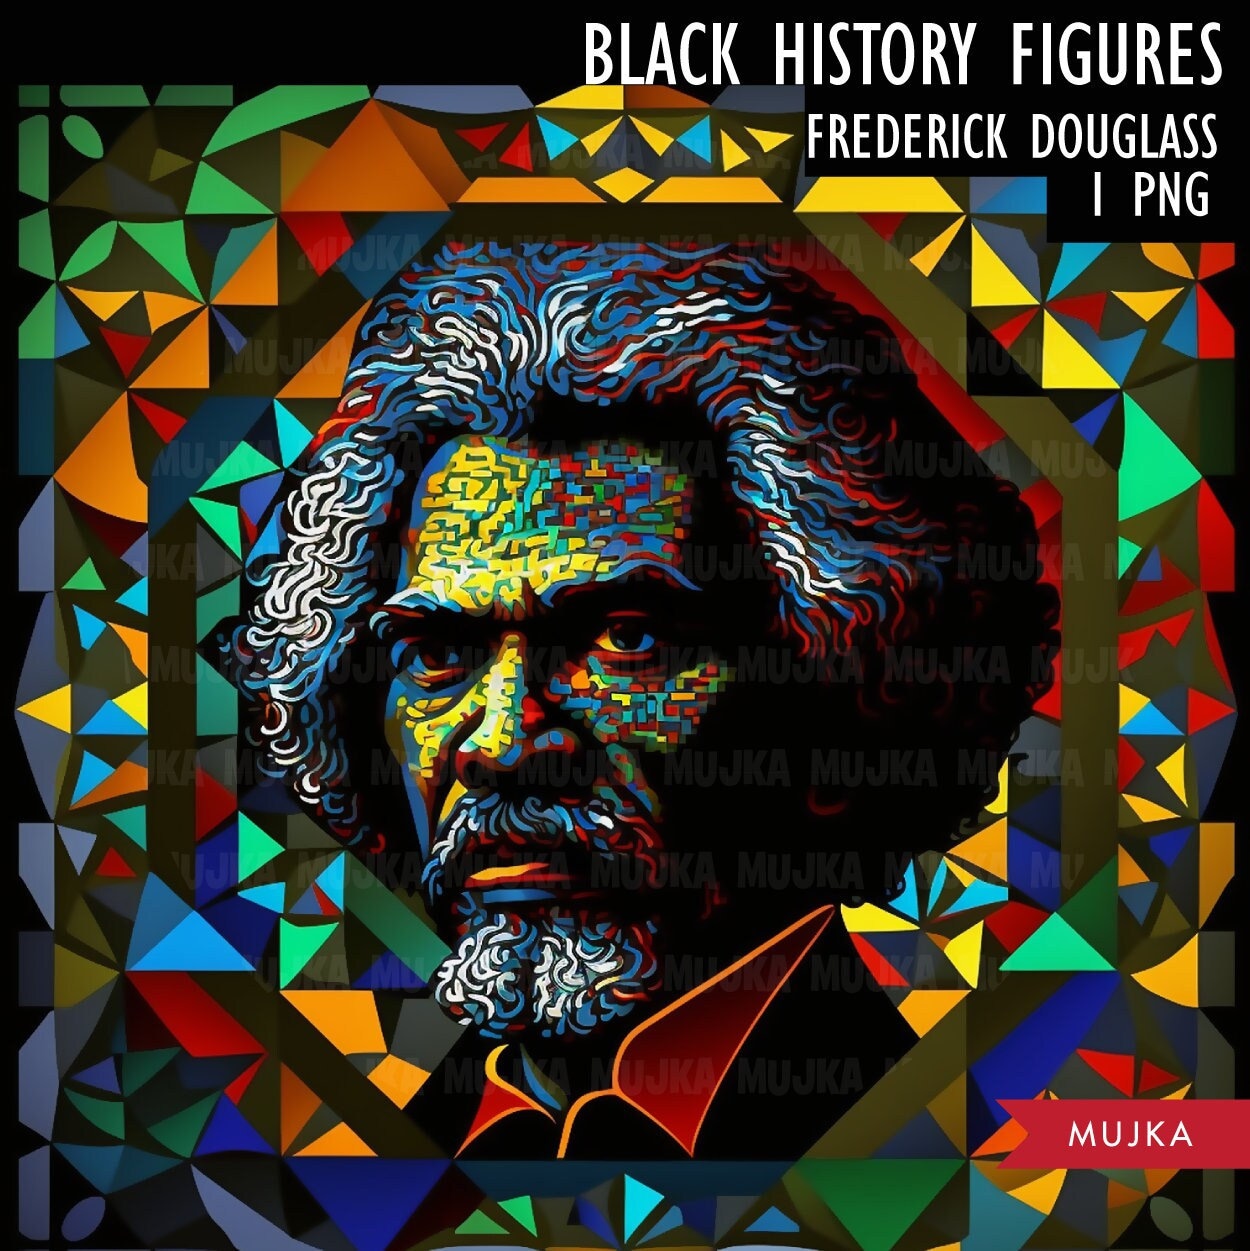 Black History PNG, Frederick Douglas poster, Black History Cards, printable Black History Art, Black History wall art, sublimation design